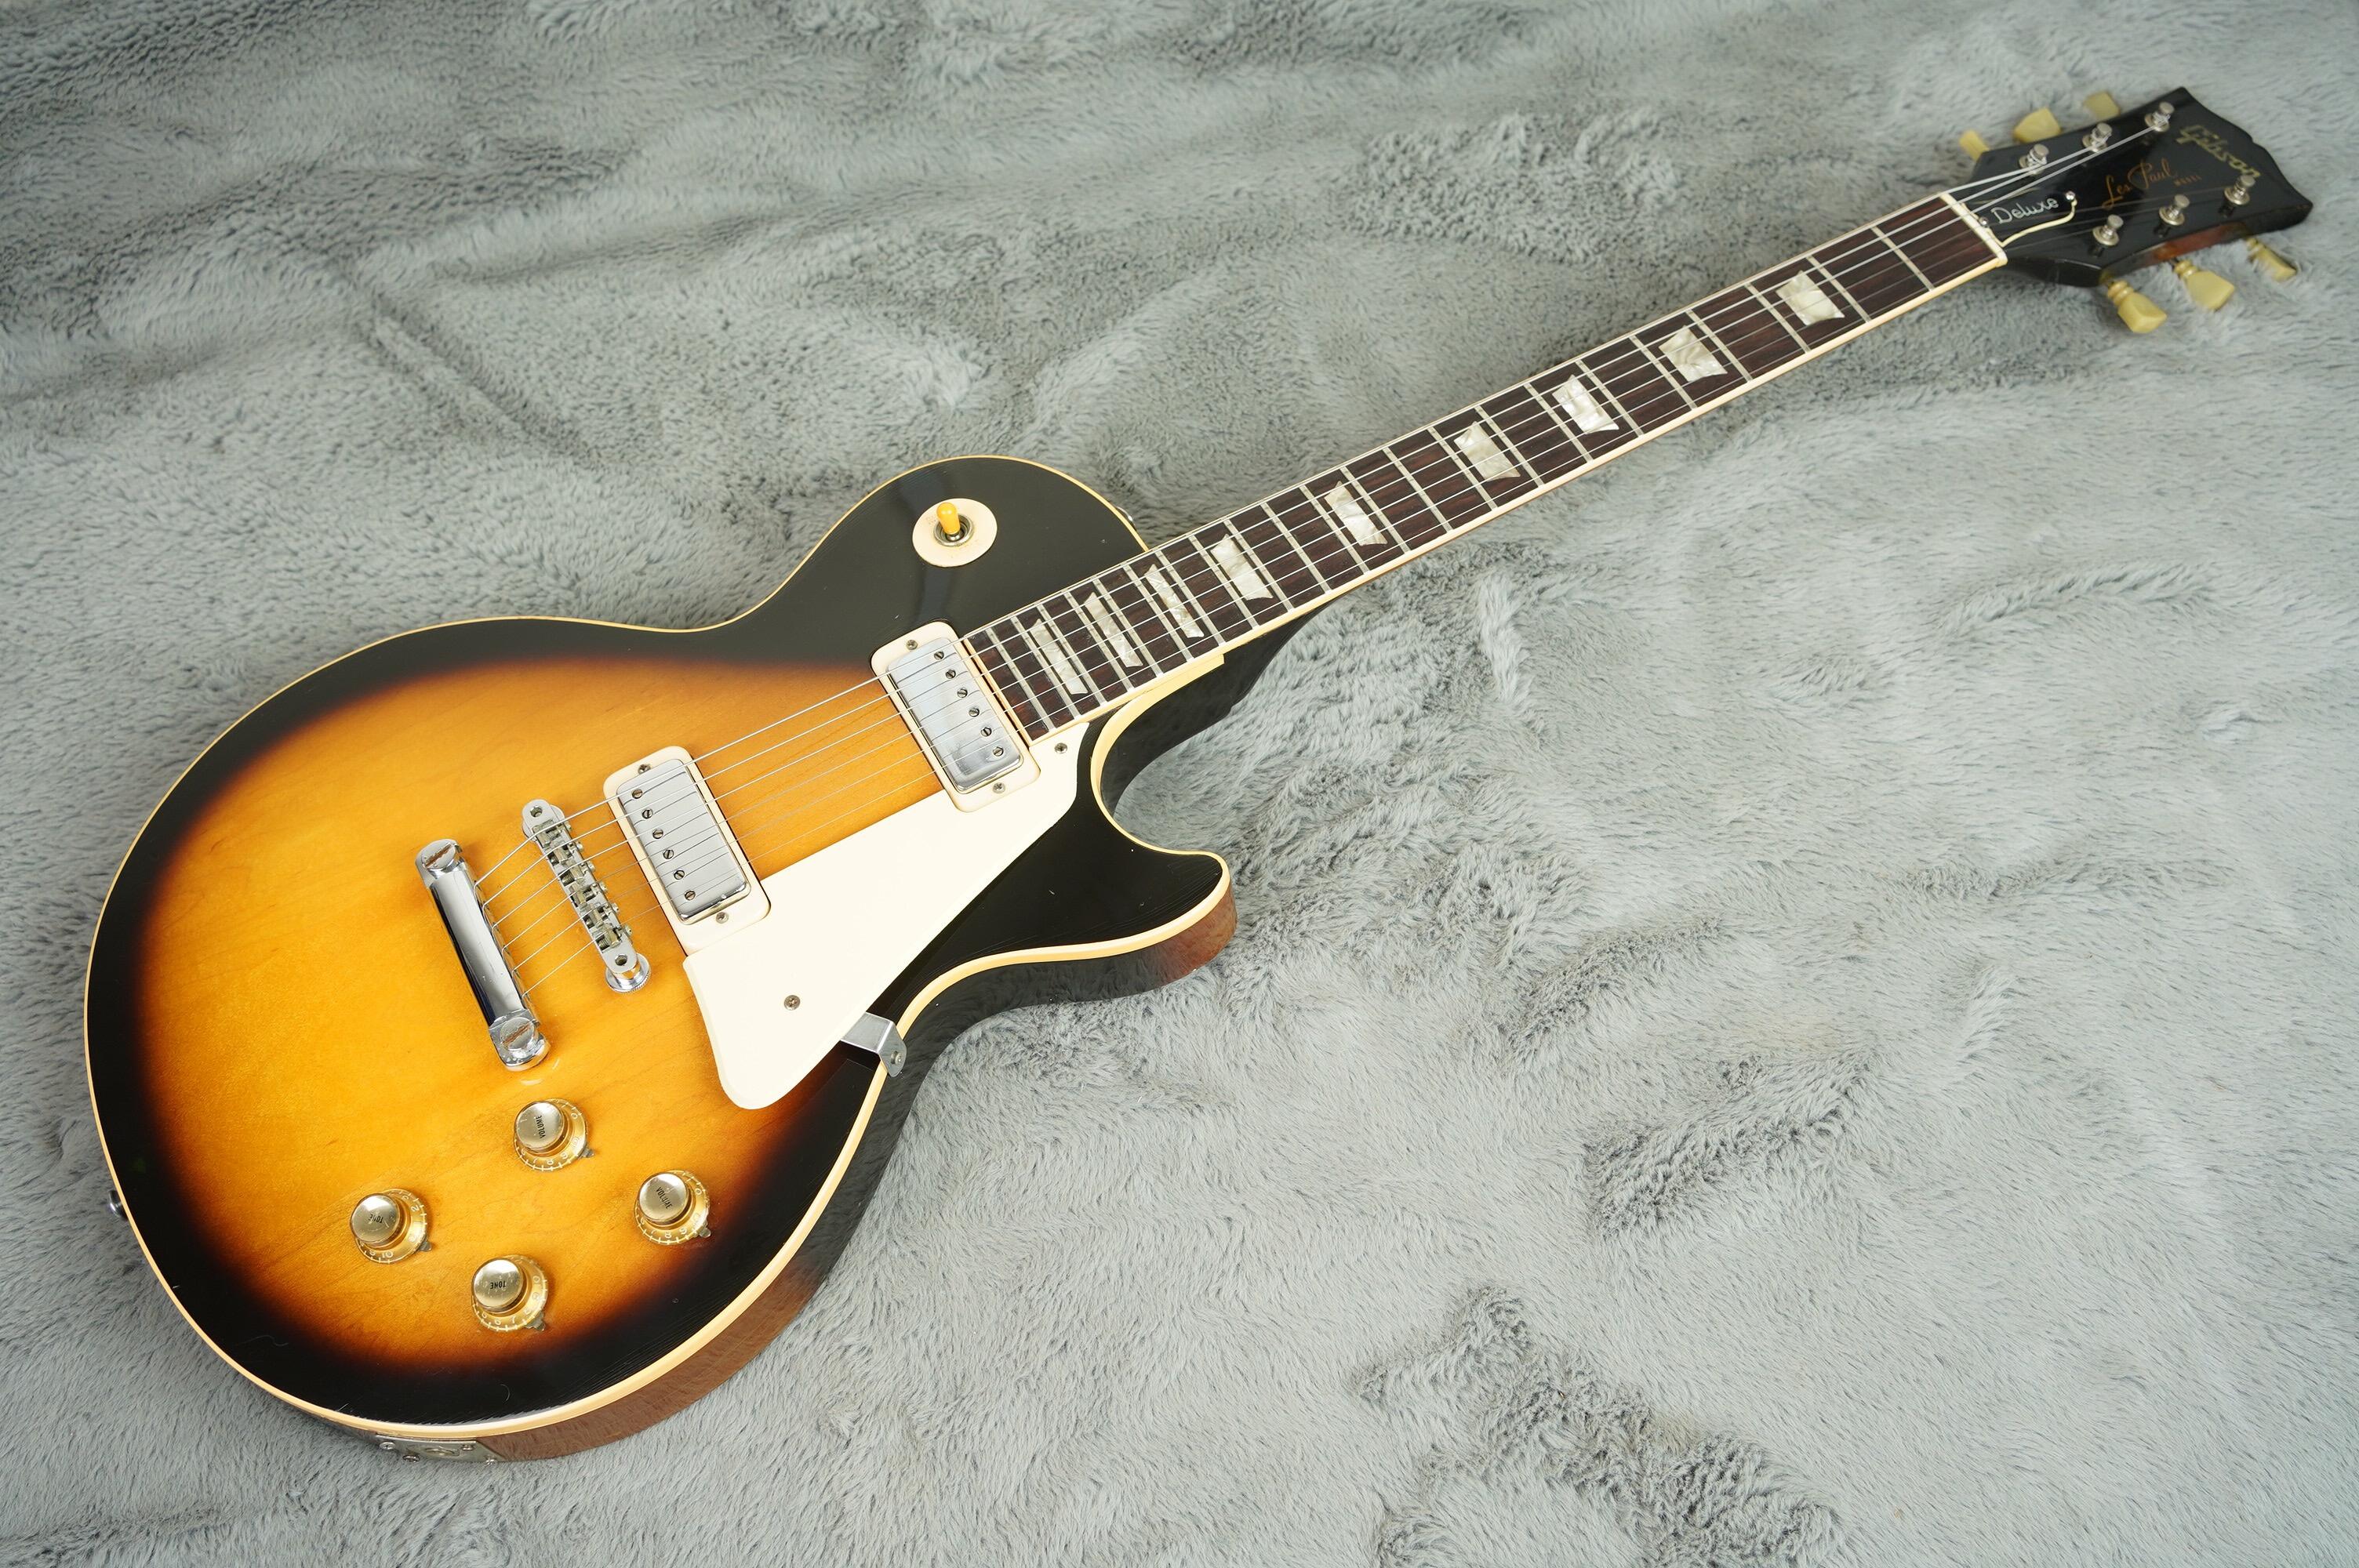 1974 Gibson Les Paul Deluxe tobacco sunburst + HSC